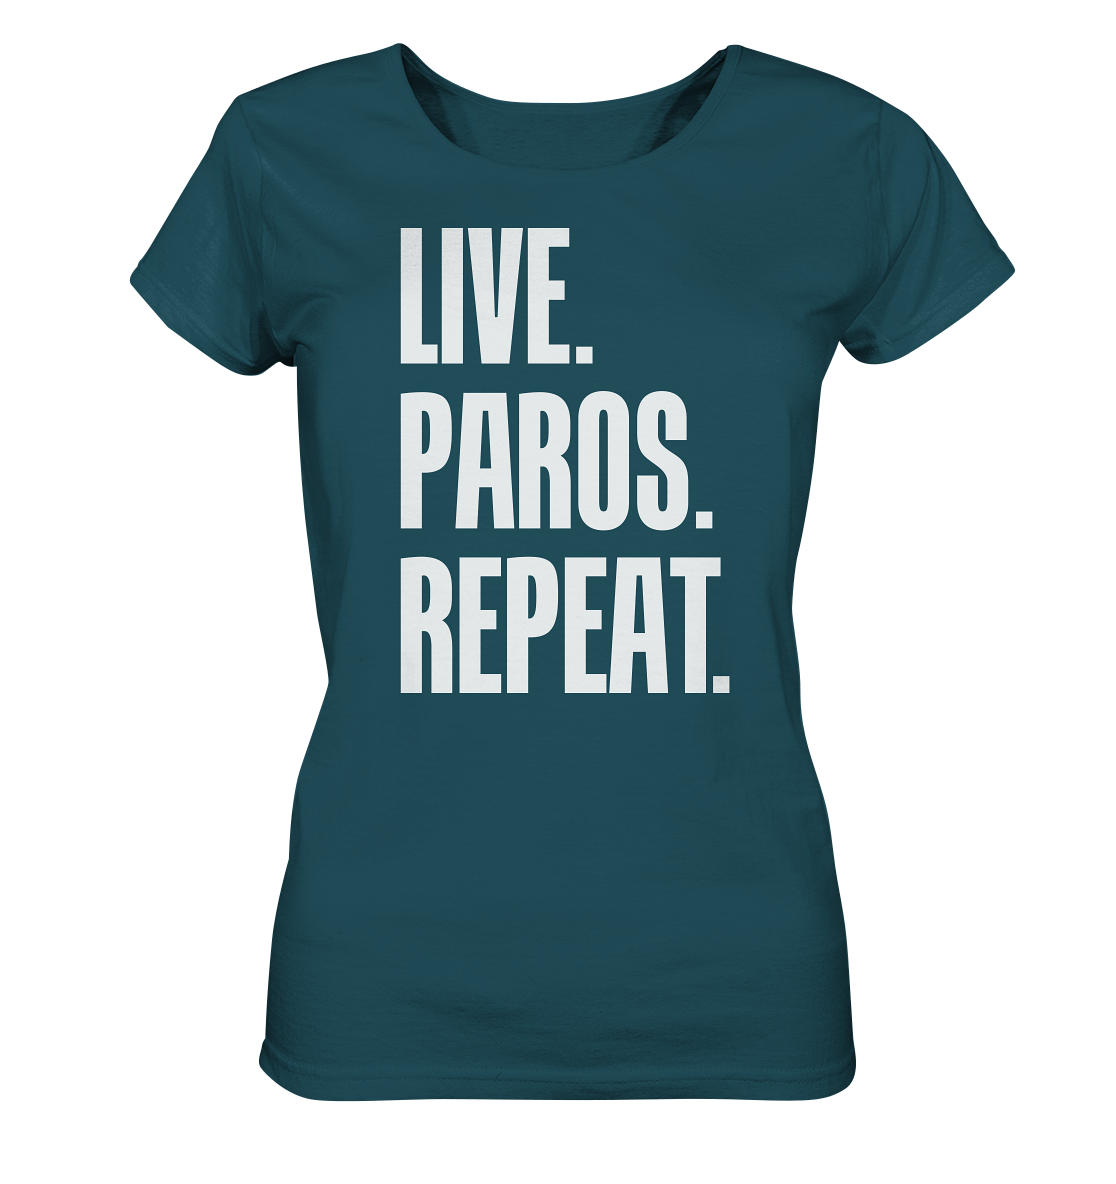 LIVE. PAROS. REPEAT. - Ladies Organic Shirt